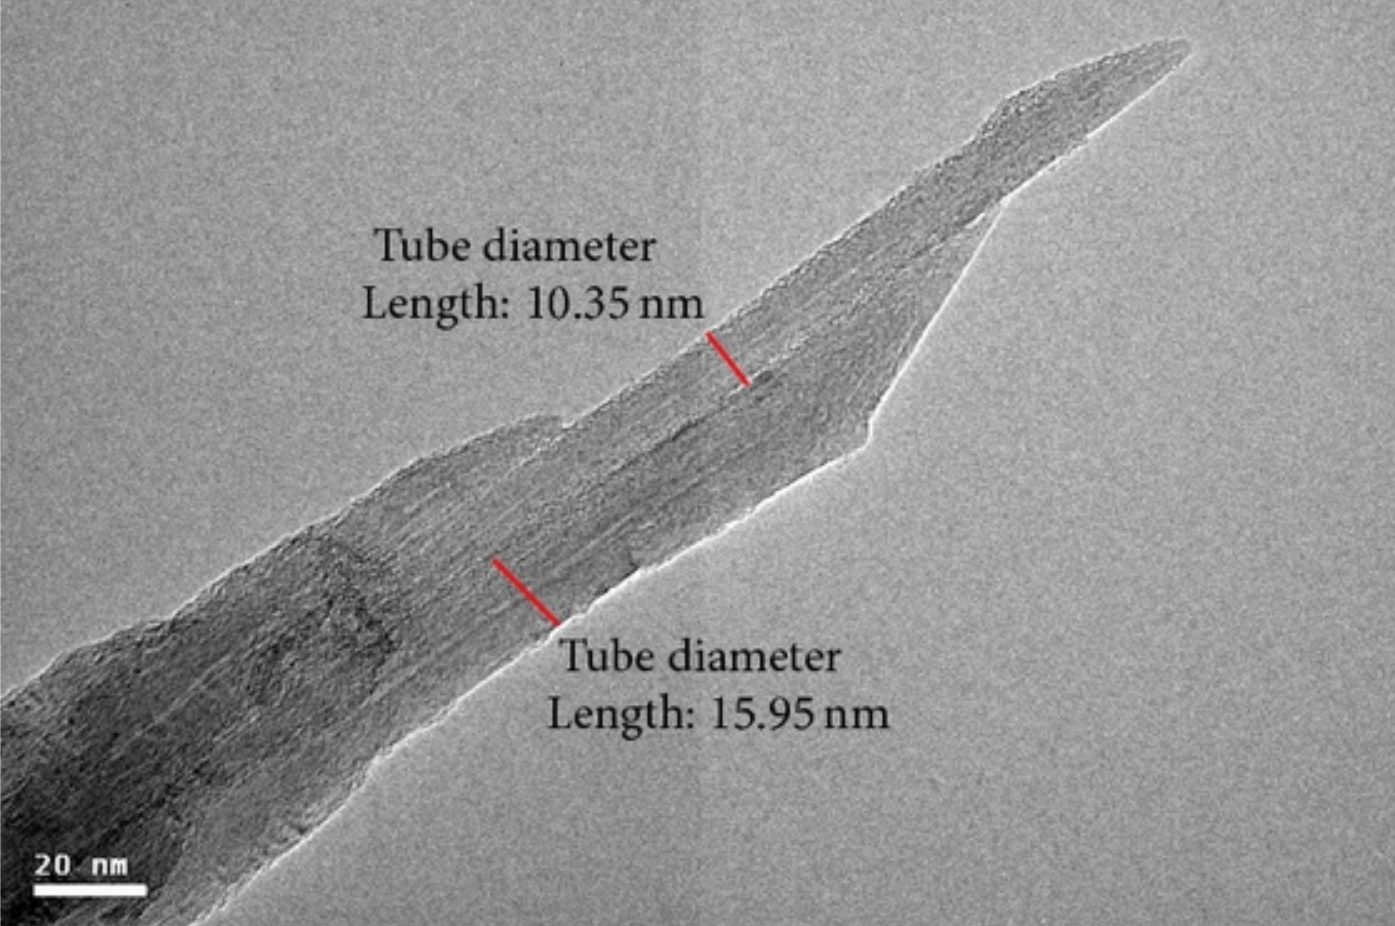 Carbon nanotube